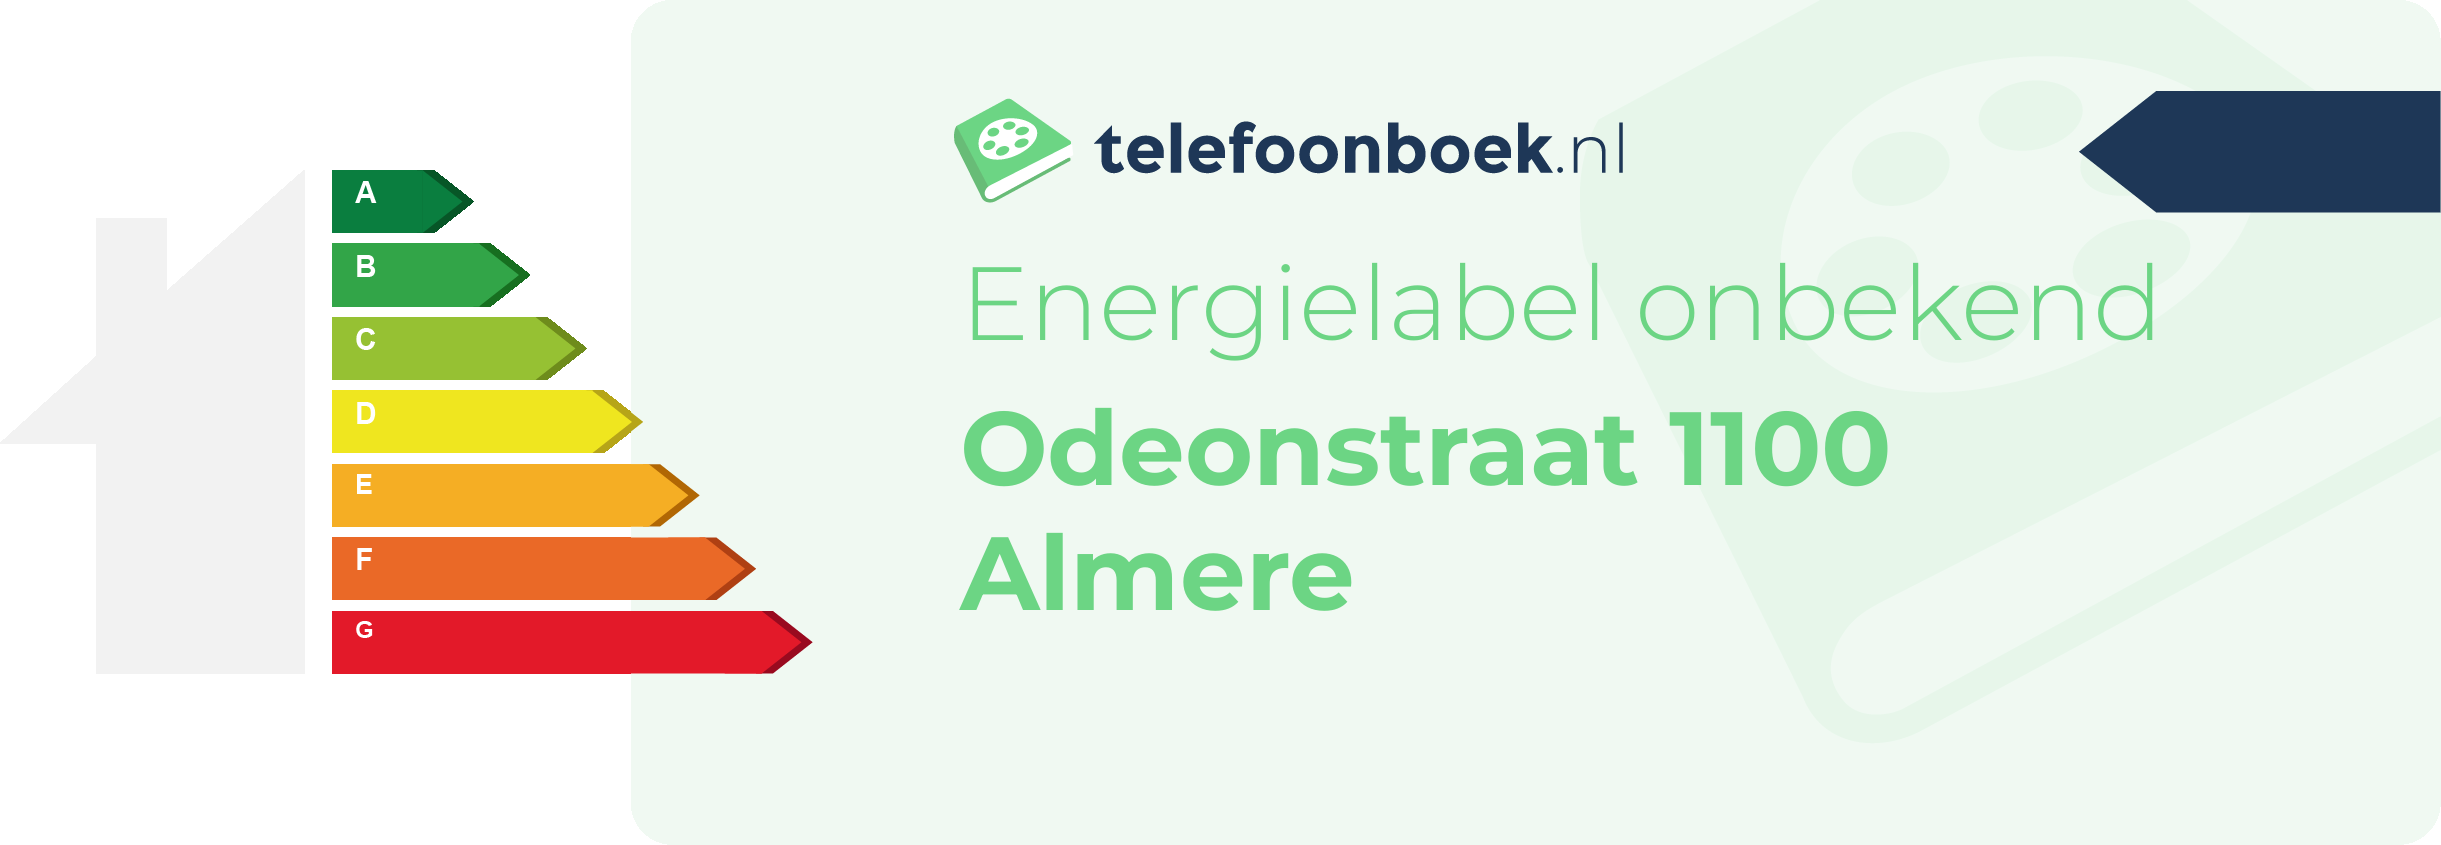 Energielabel Odeonstraat 1100 Almere